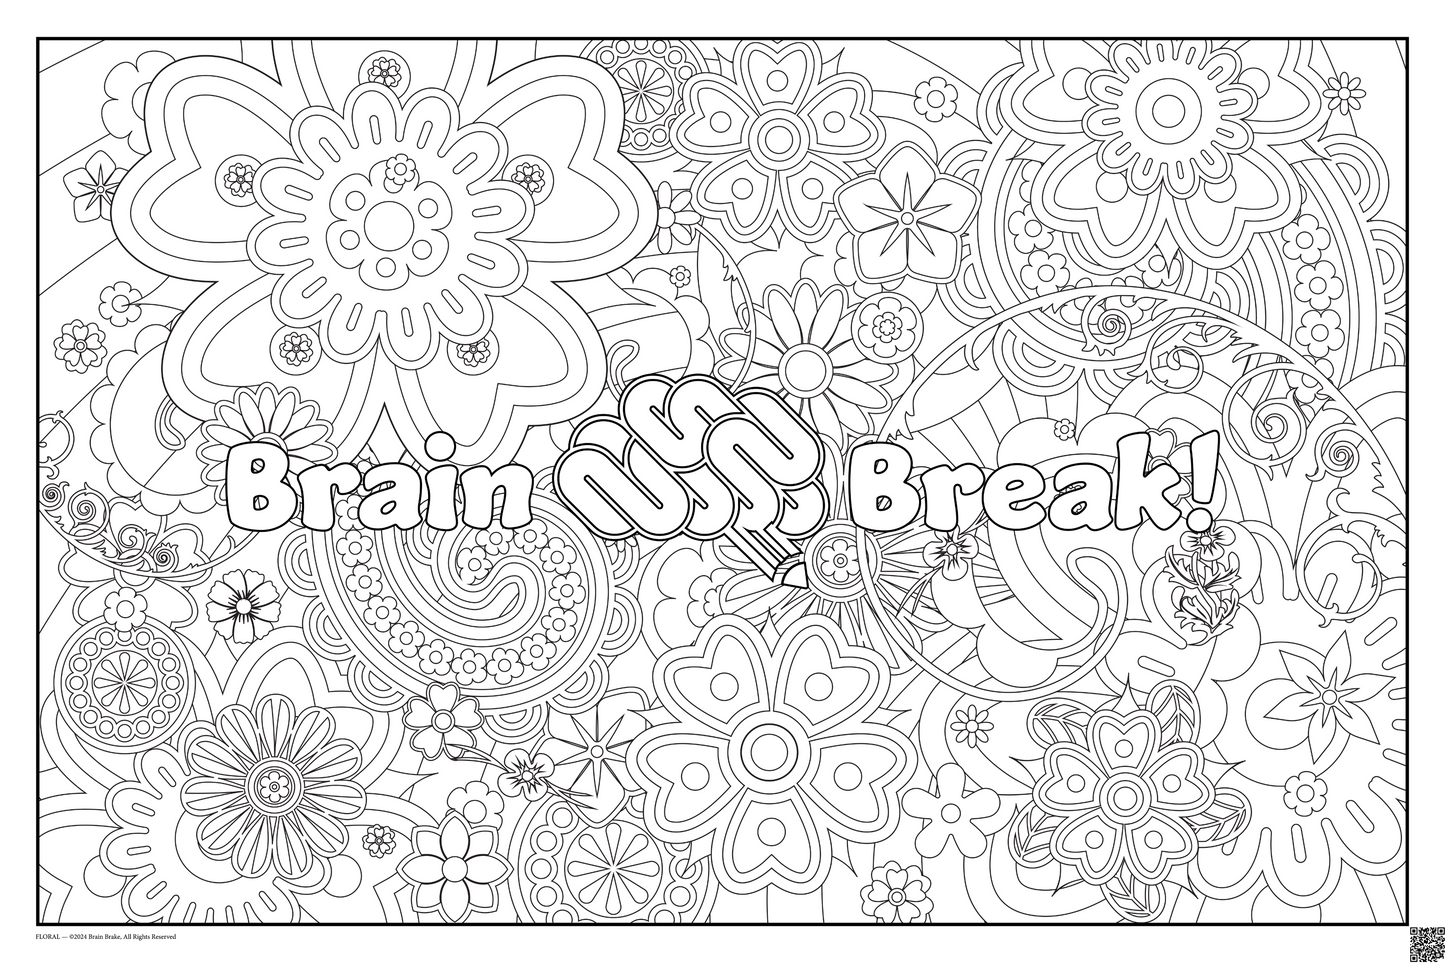 Calming Corner: Brain Break